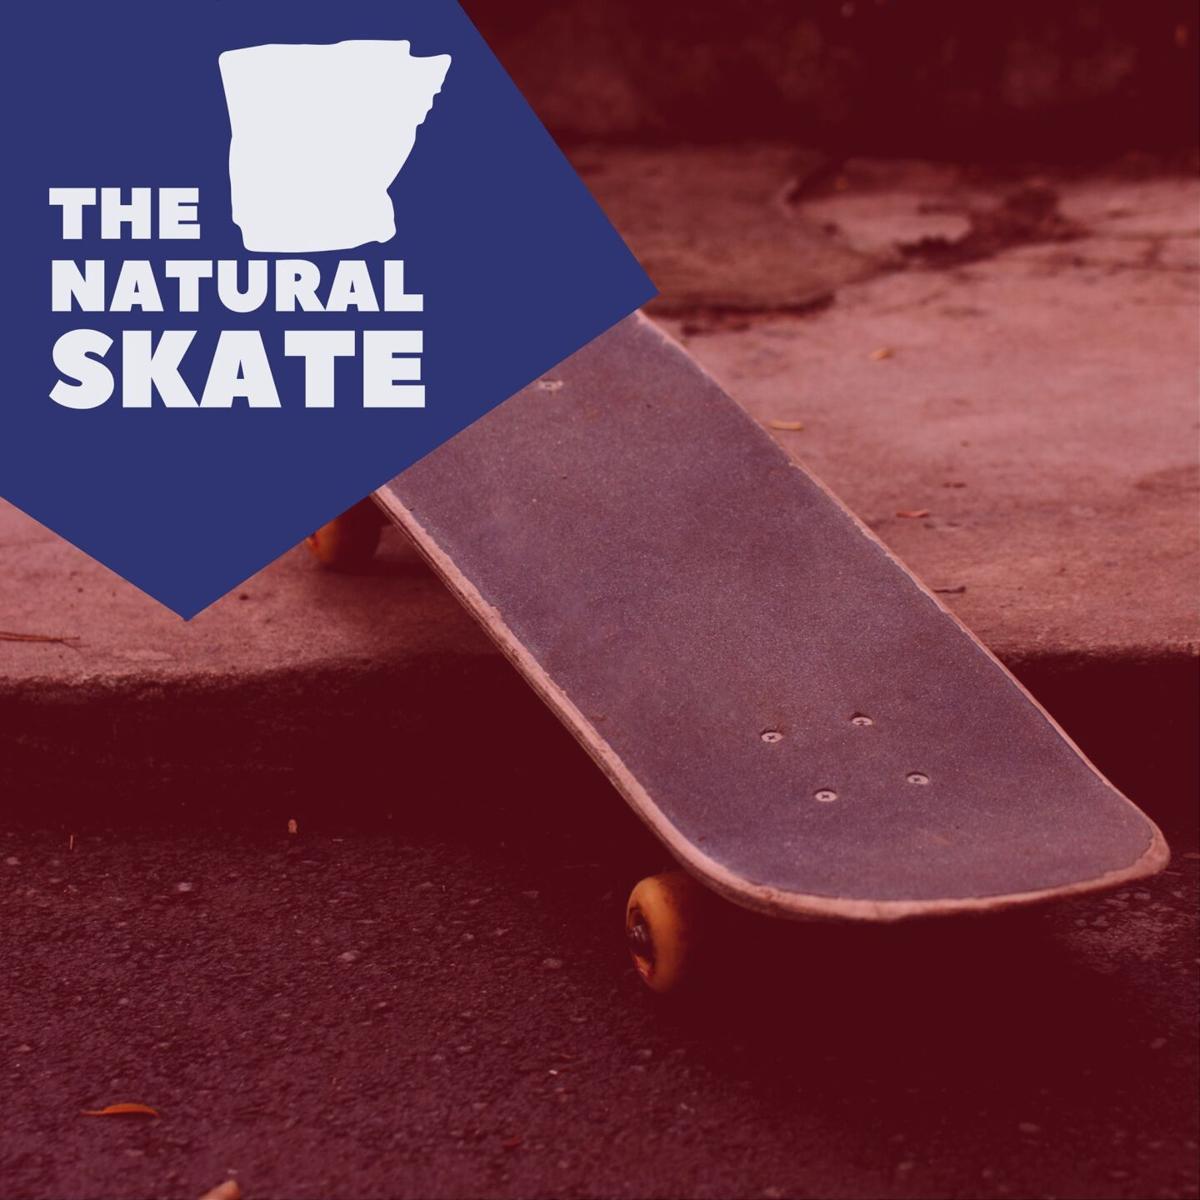 The Natural Skate